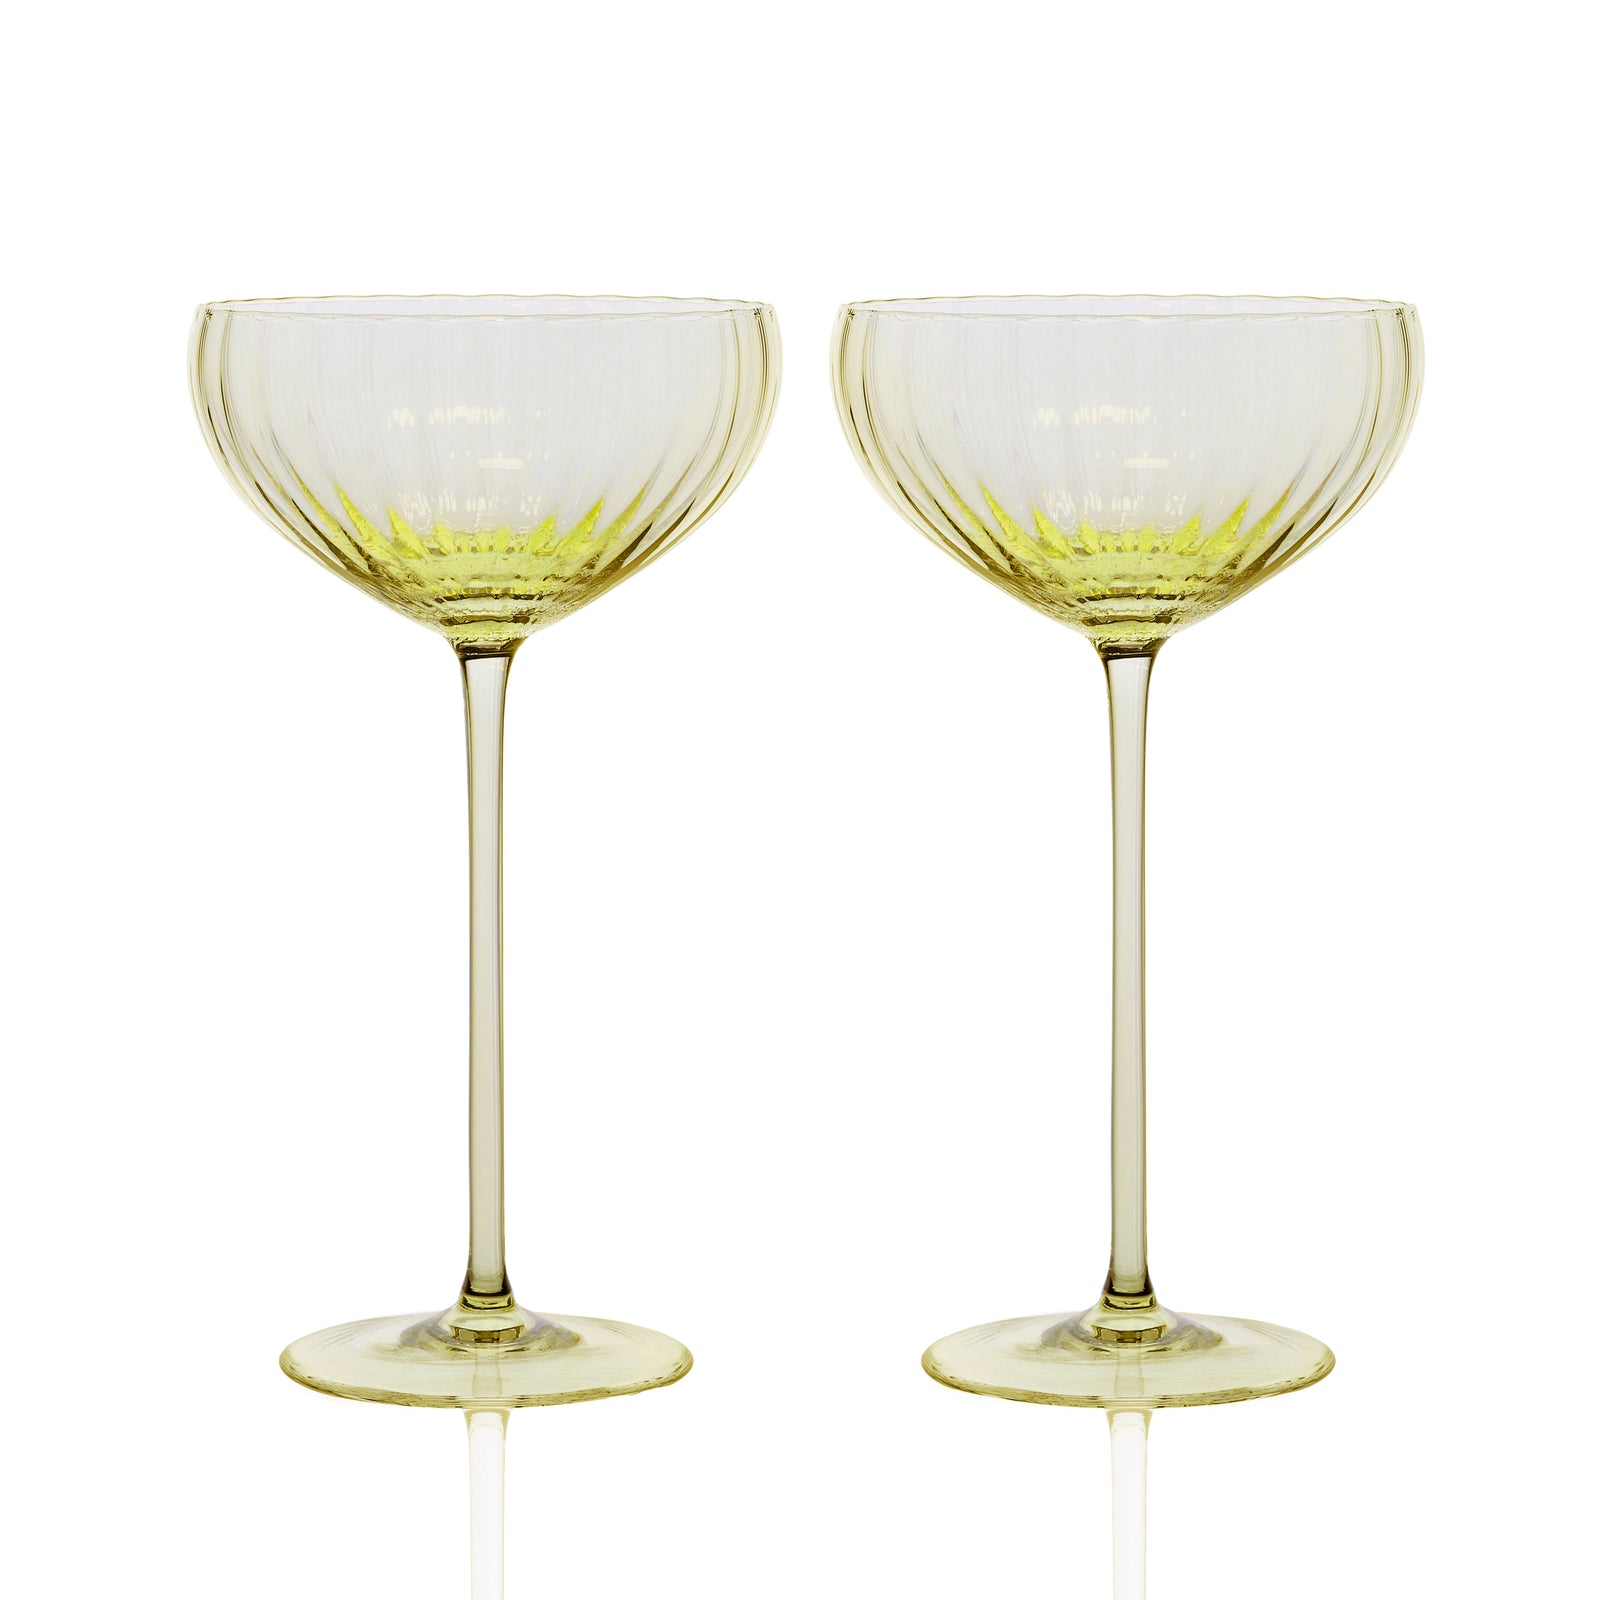 Caskata Celia Ocean & Citrine Coupe Cocktail Glasses Set of 2